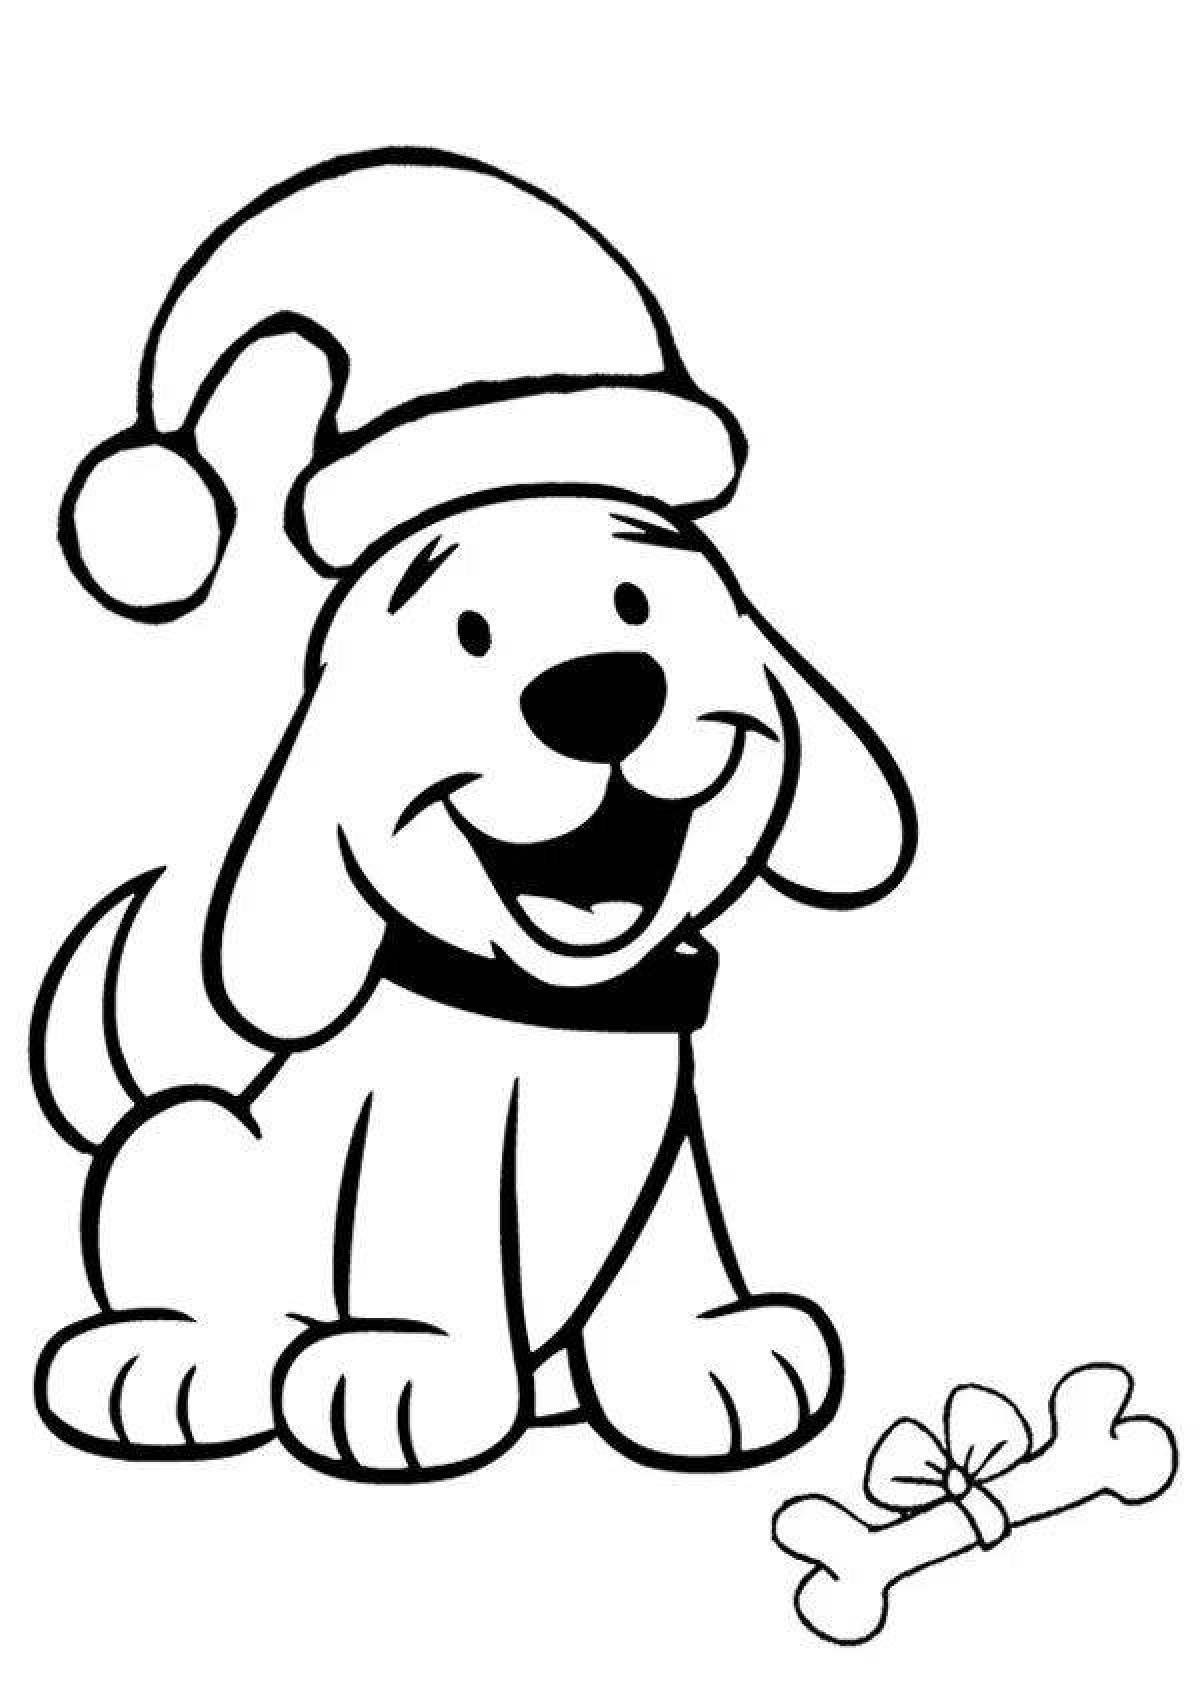 Wonderful dog Christmas coloring book